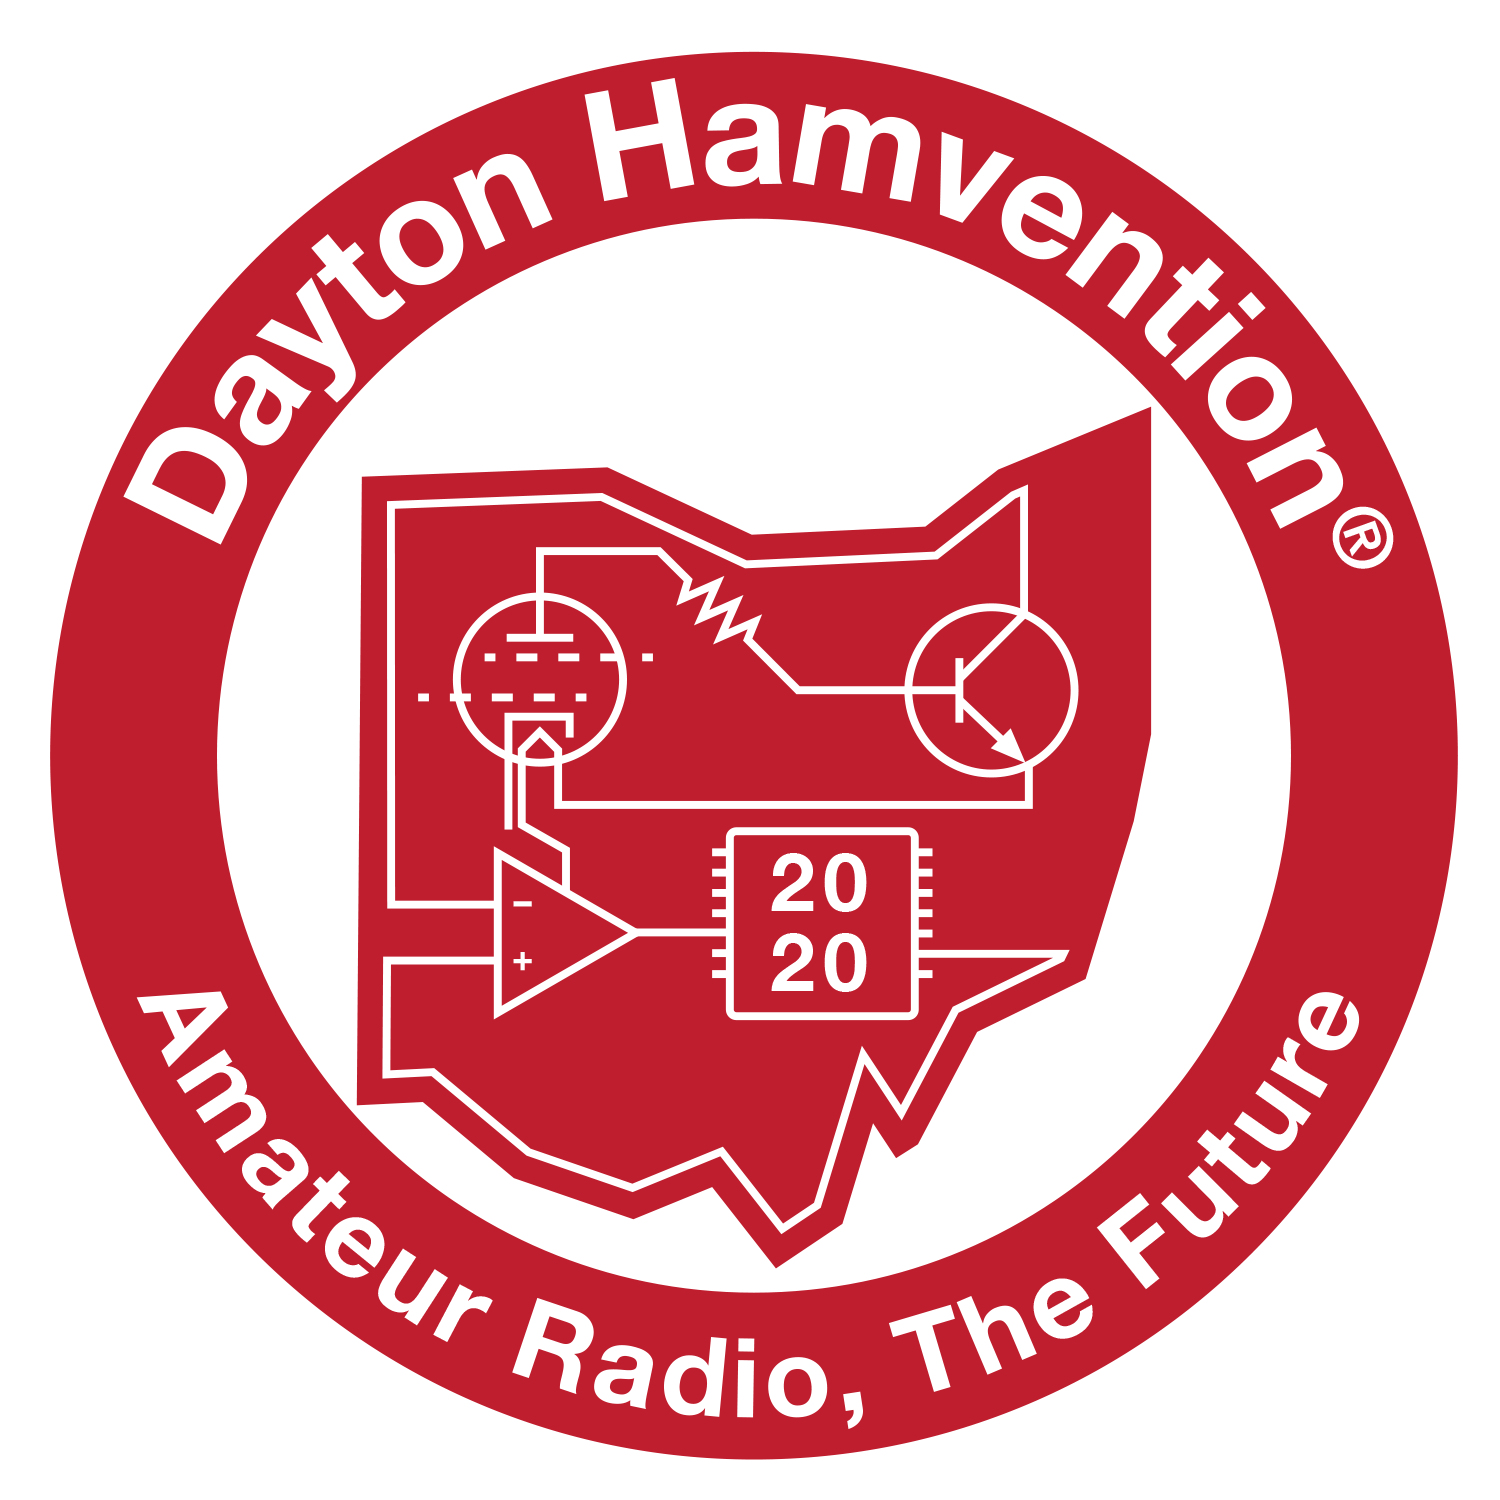 Dayton Hamvention Announces Cancelation of 2020 Show